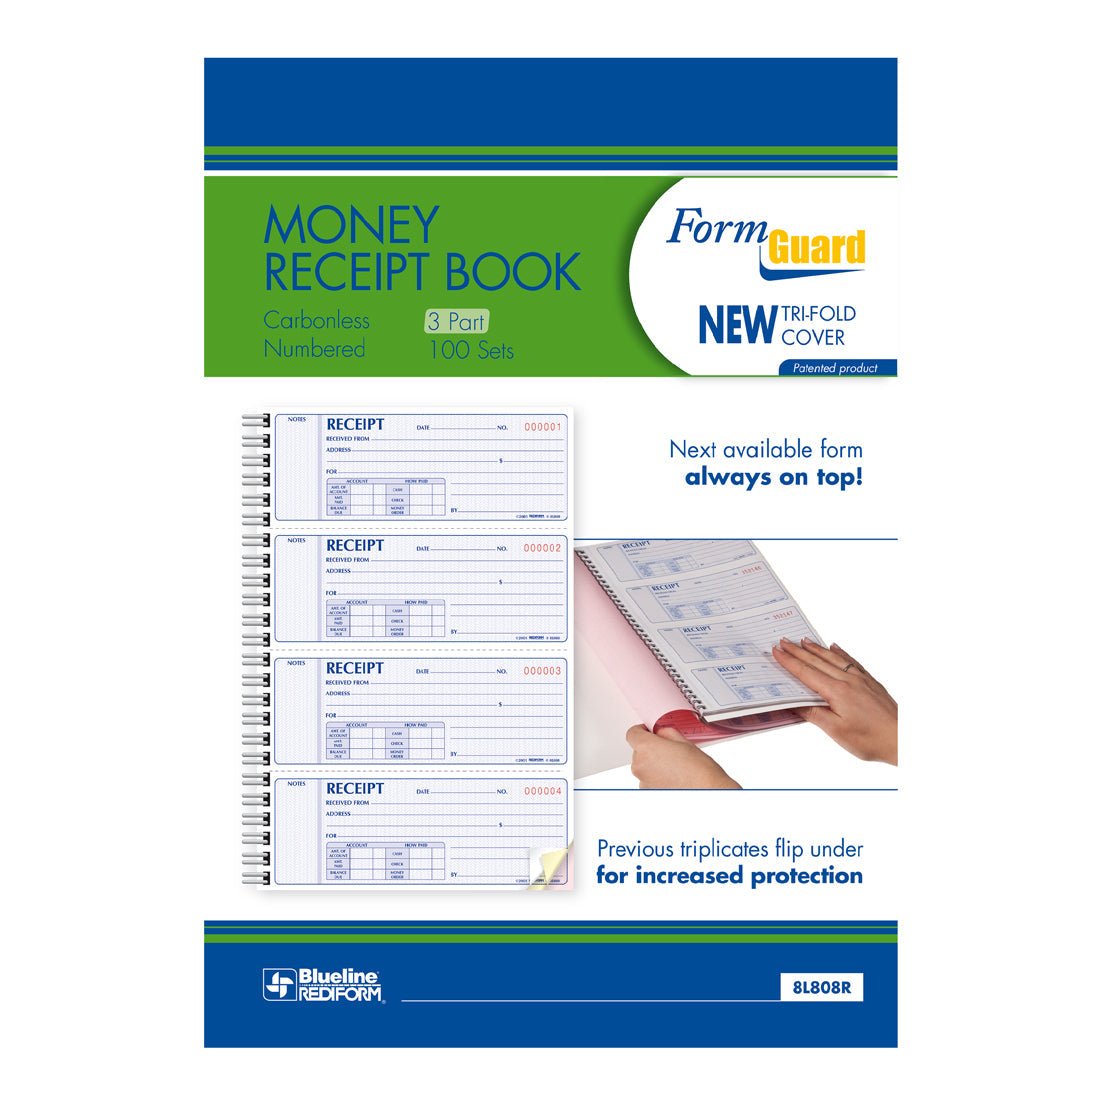 Formguard Money Receipt Book 8L808R